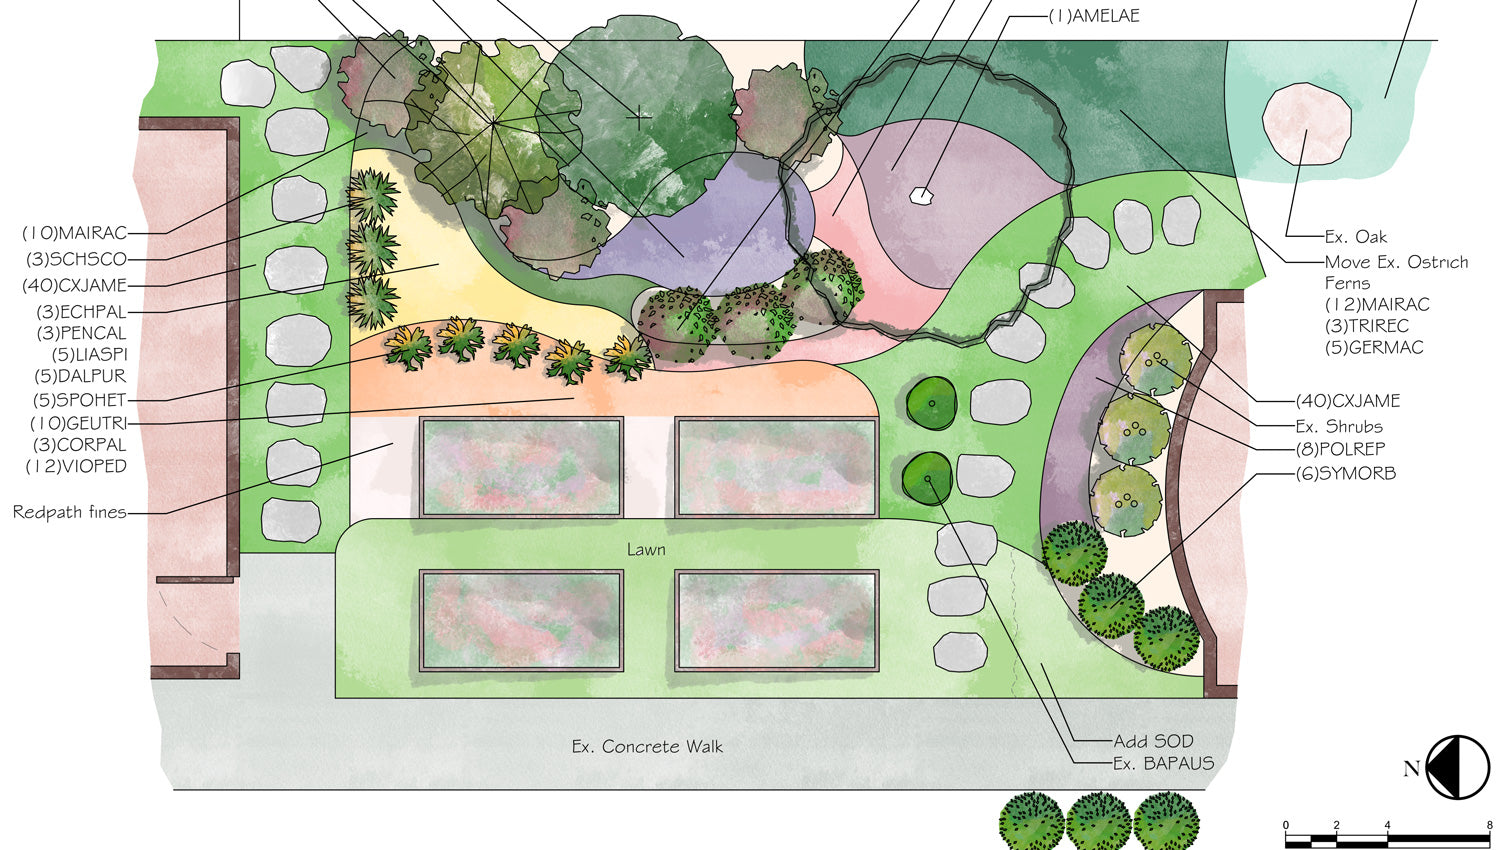 A landscape design plan for a native garden and outdoor space